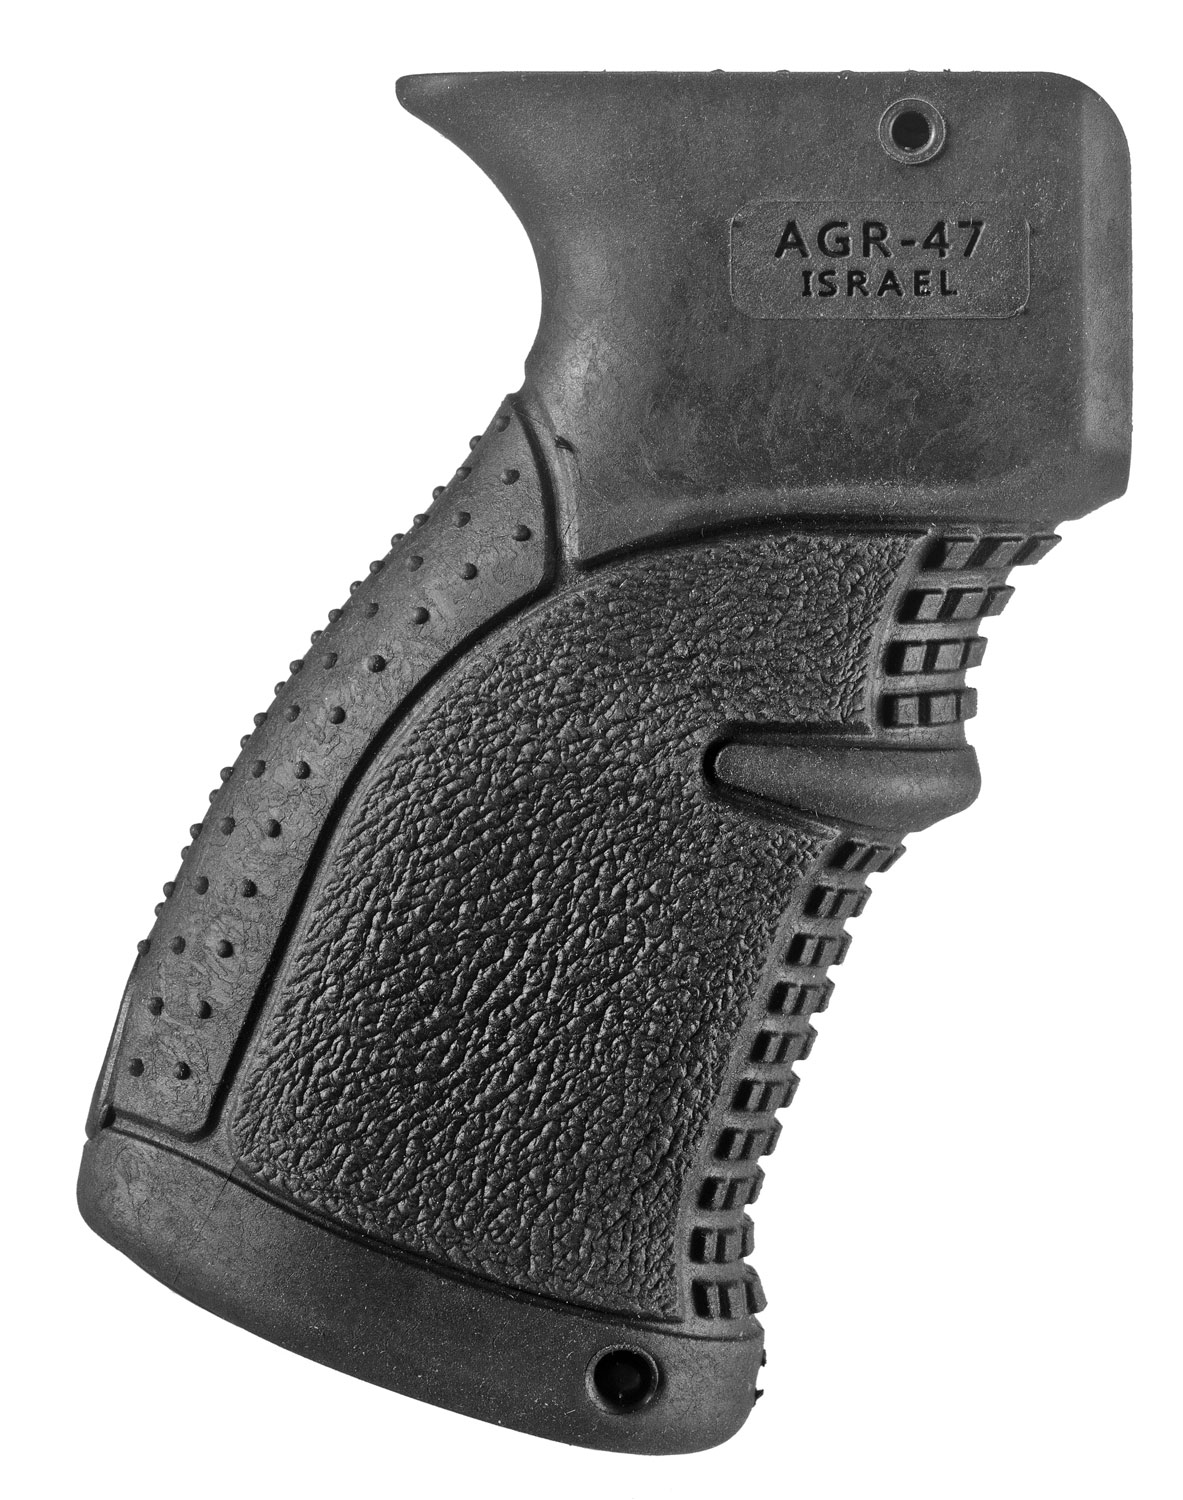 FAB Defense FXAGR47B AGR-47 Ergonomic Pistol Grip Made of Polymer with Black Rubber Overmold Multi-Textured Finish for AK-47, ATI Galil, AK-74